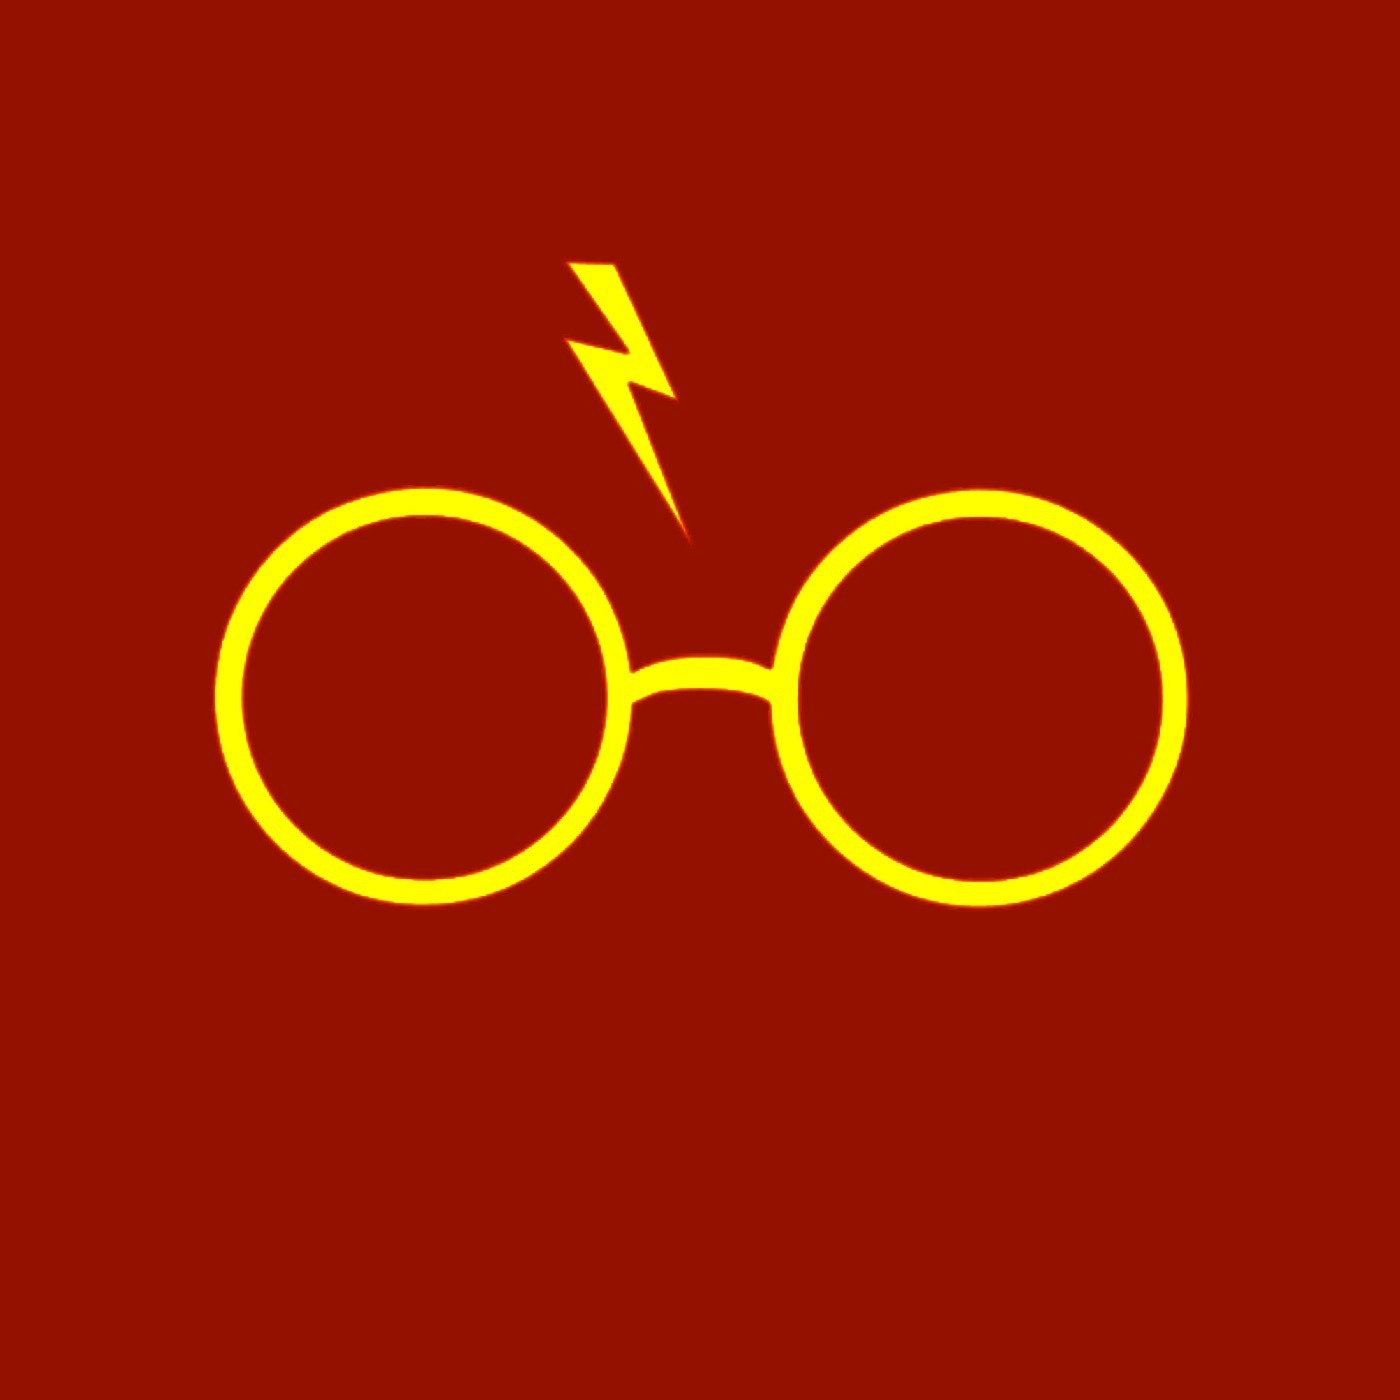 67 - Harry Potter Hangout: TOP 3 Dumbledore Quotes